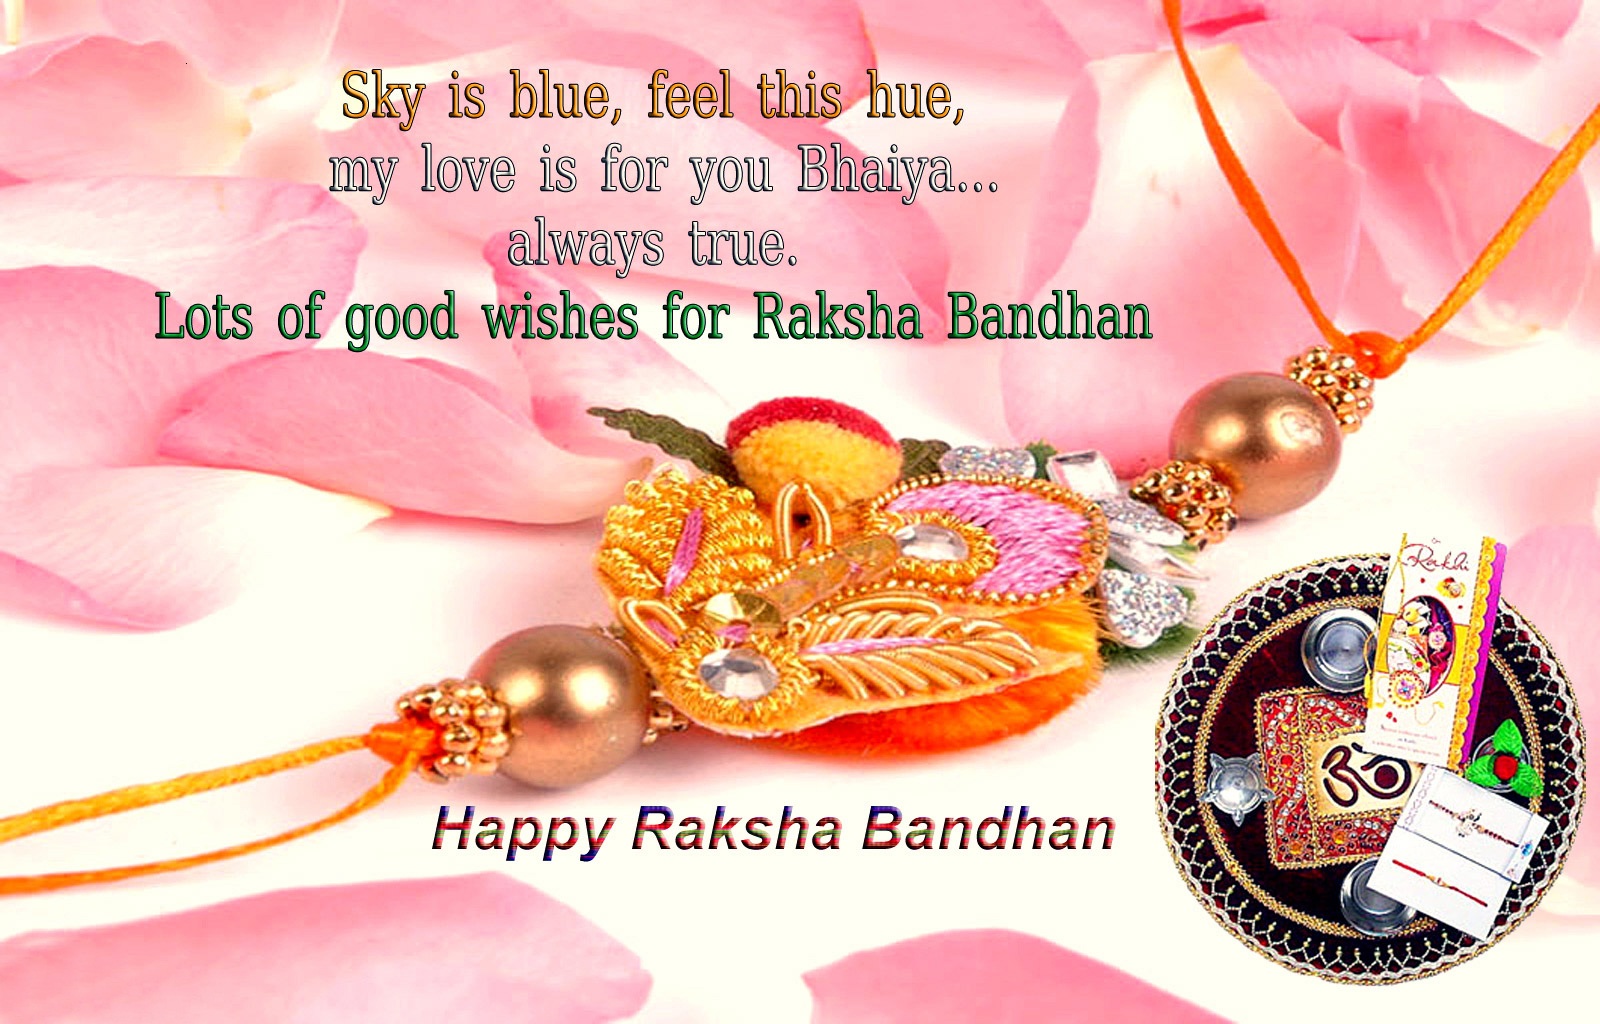 Happy Raksha Bandhan Whatsapp Status and messages 